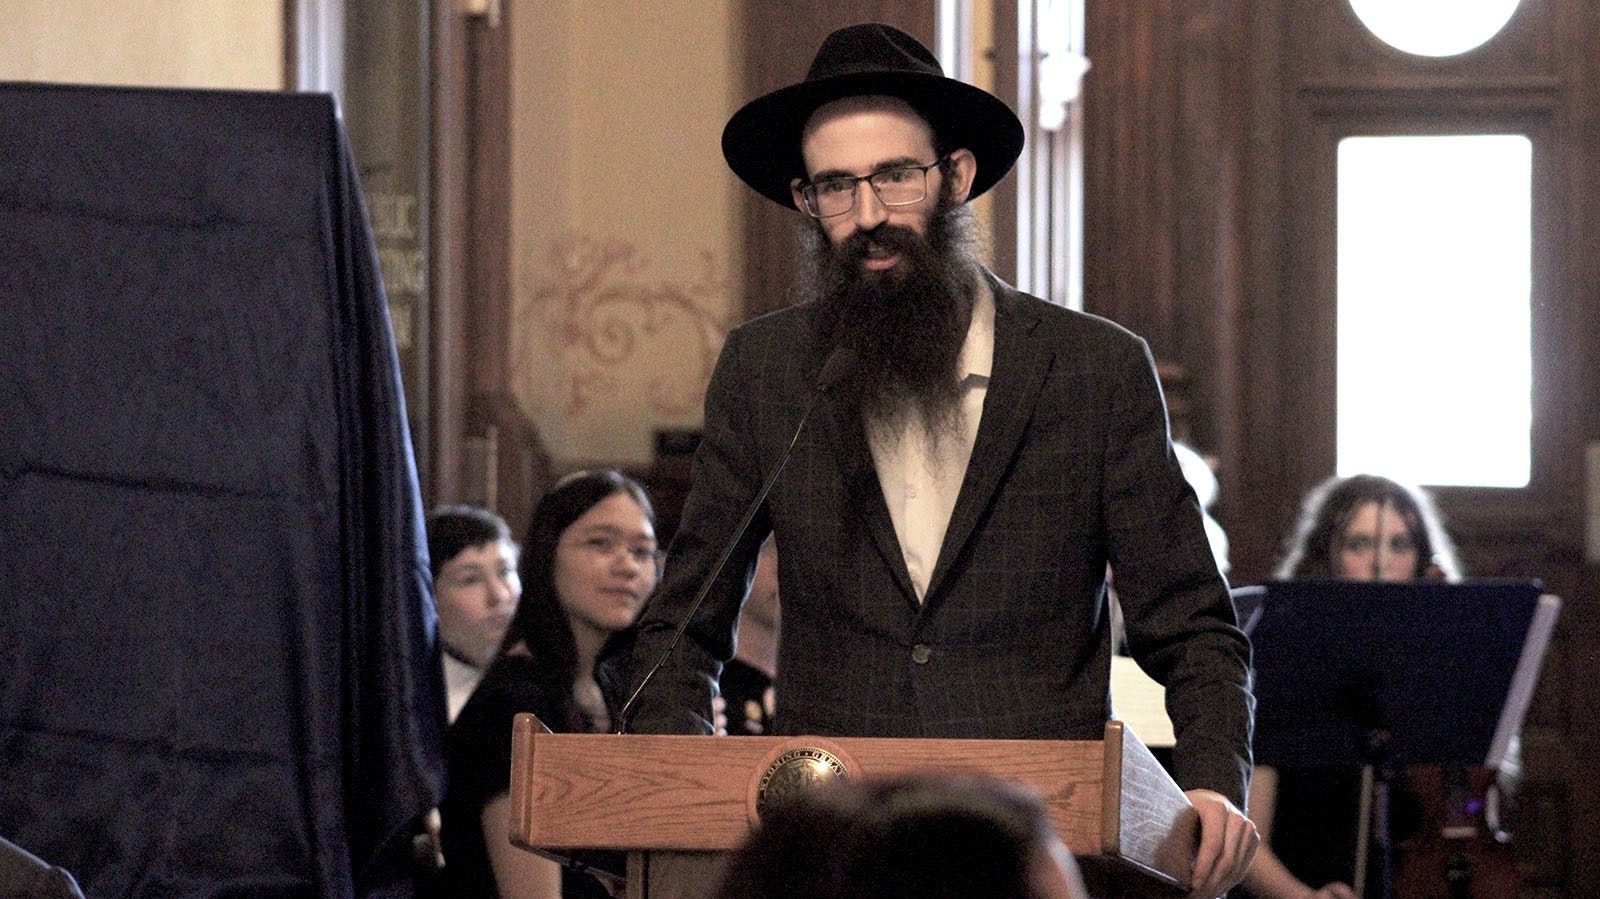 Rabbi Yaakov Raskin of the Chabad Lubavitch of Laramie Jewish temple talks at Monday's Chanukah event at the state Capitol.